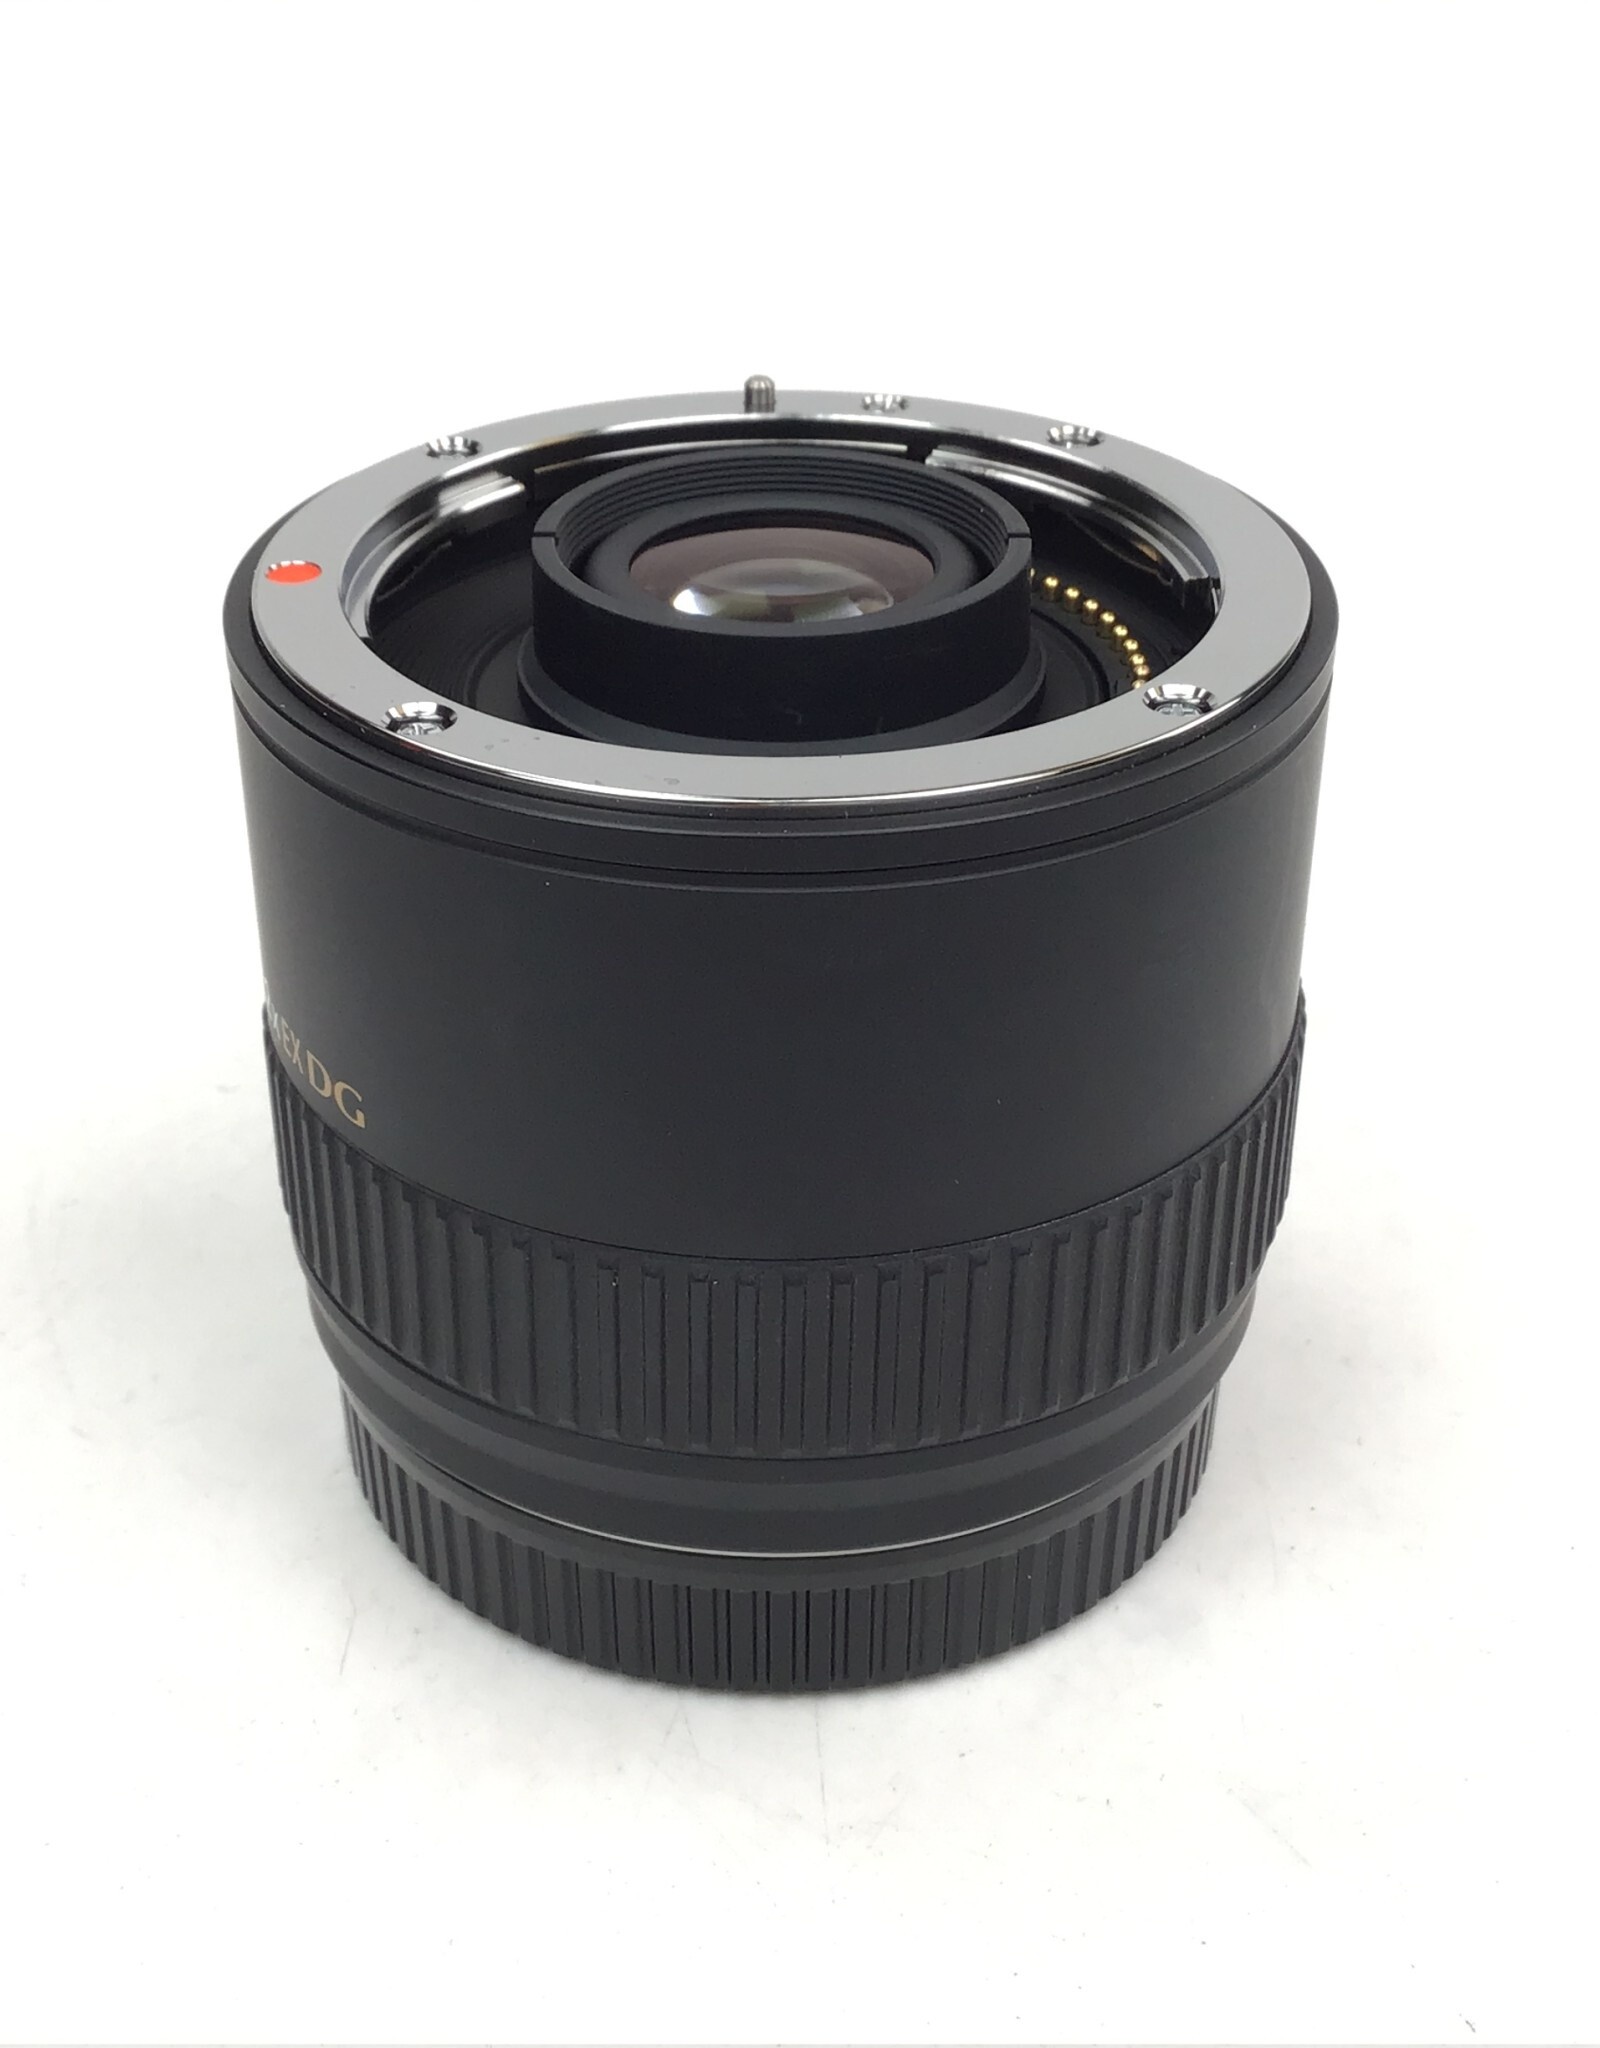 SIGMA Sigma APO Teleconverter 2x EX DG for Canon EF Mount in Box Used Good